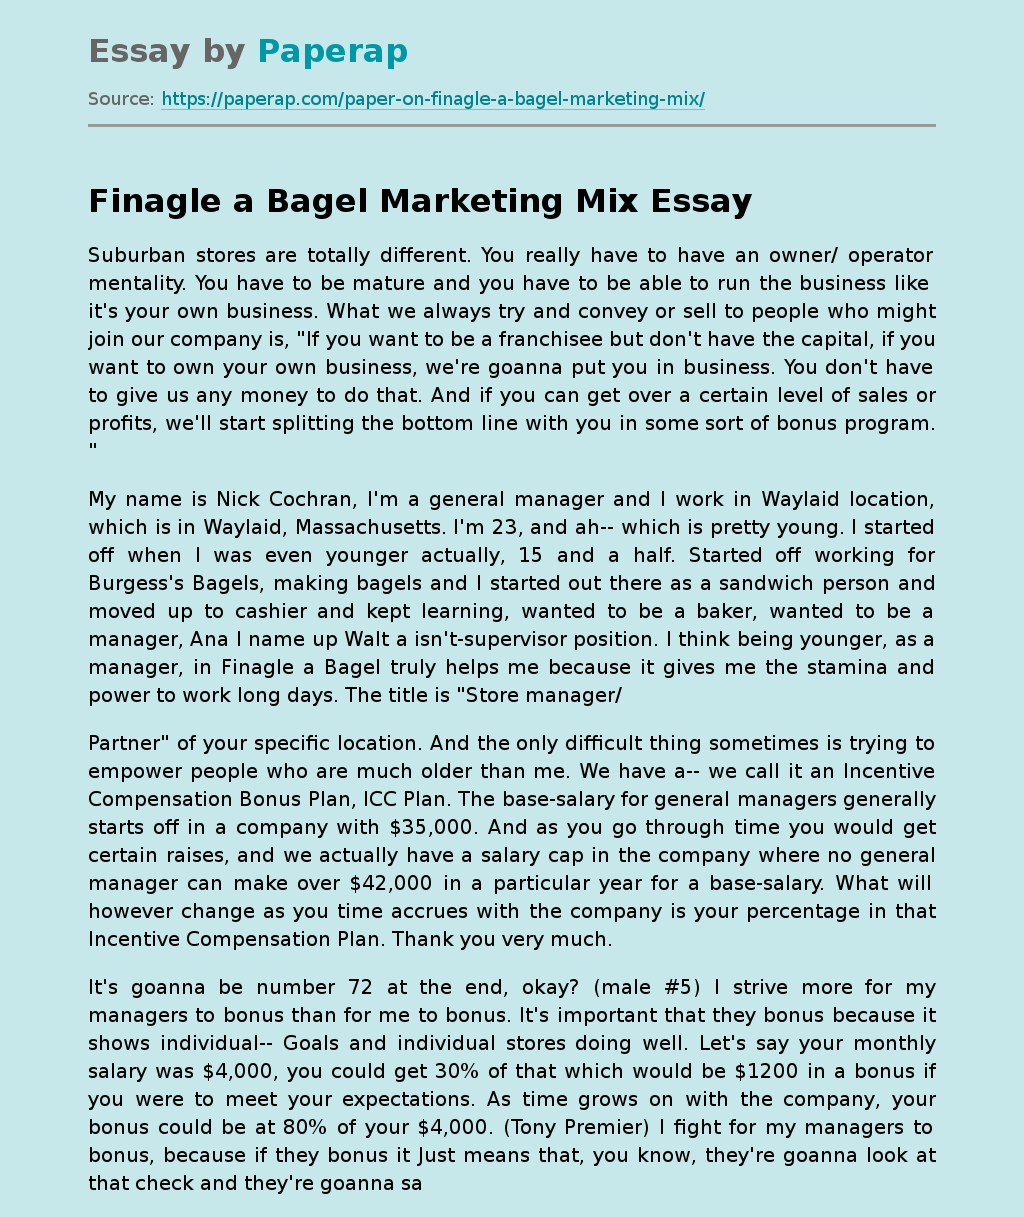 Finagle a Bagel Marketing Mix